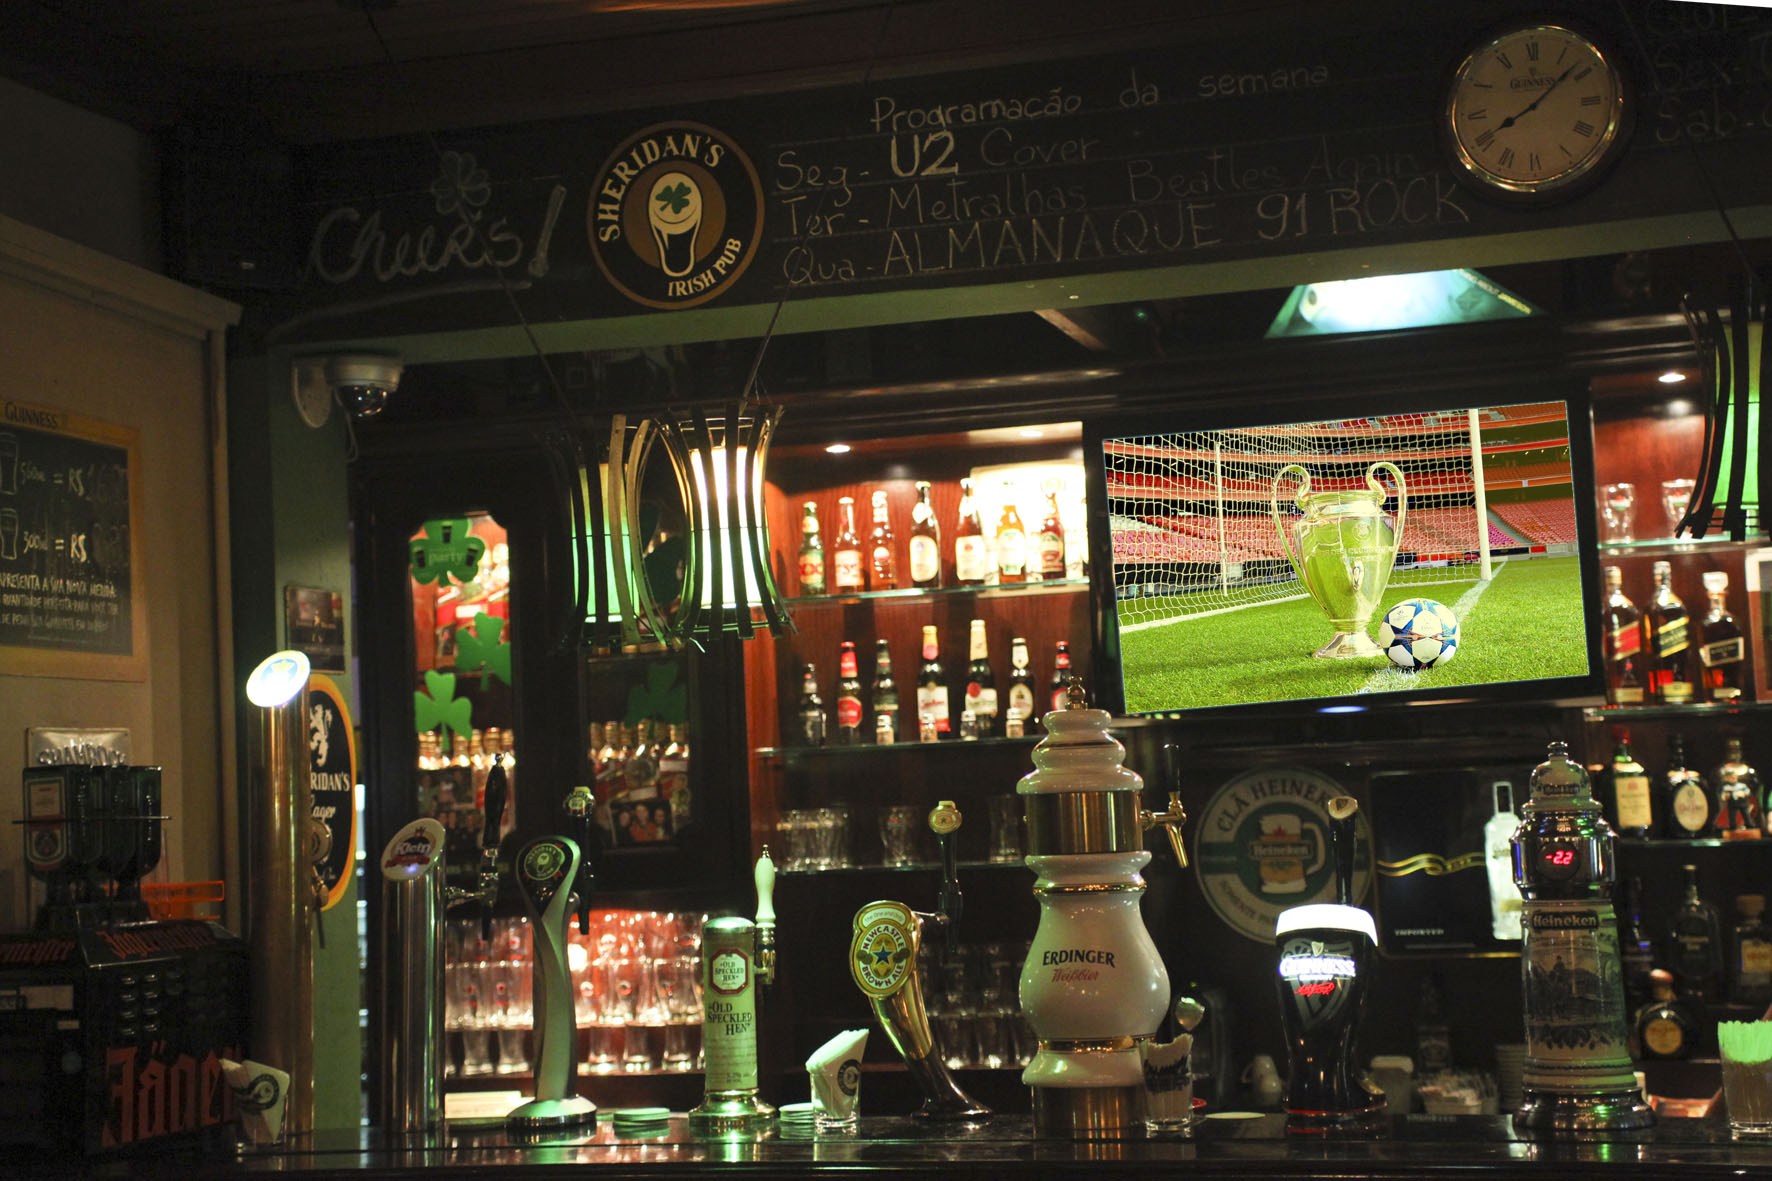 Final da Champions League em Curitiba no sheridan's irish pub